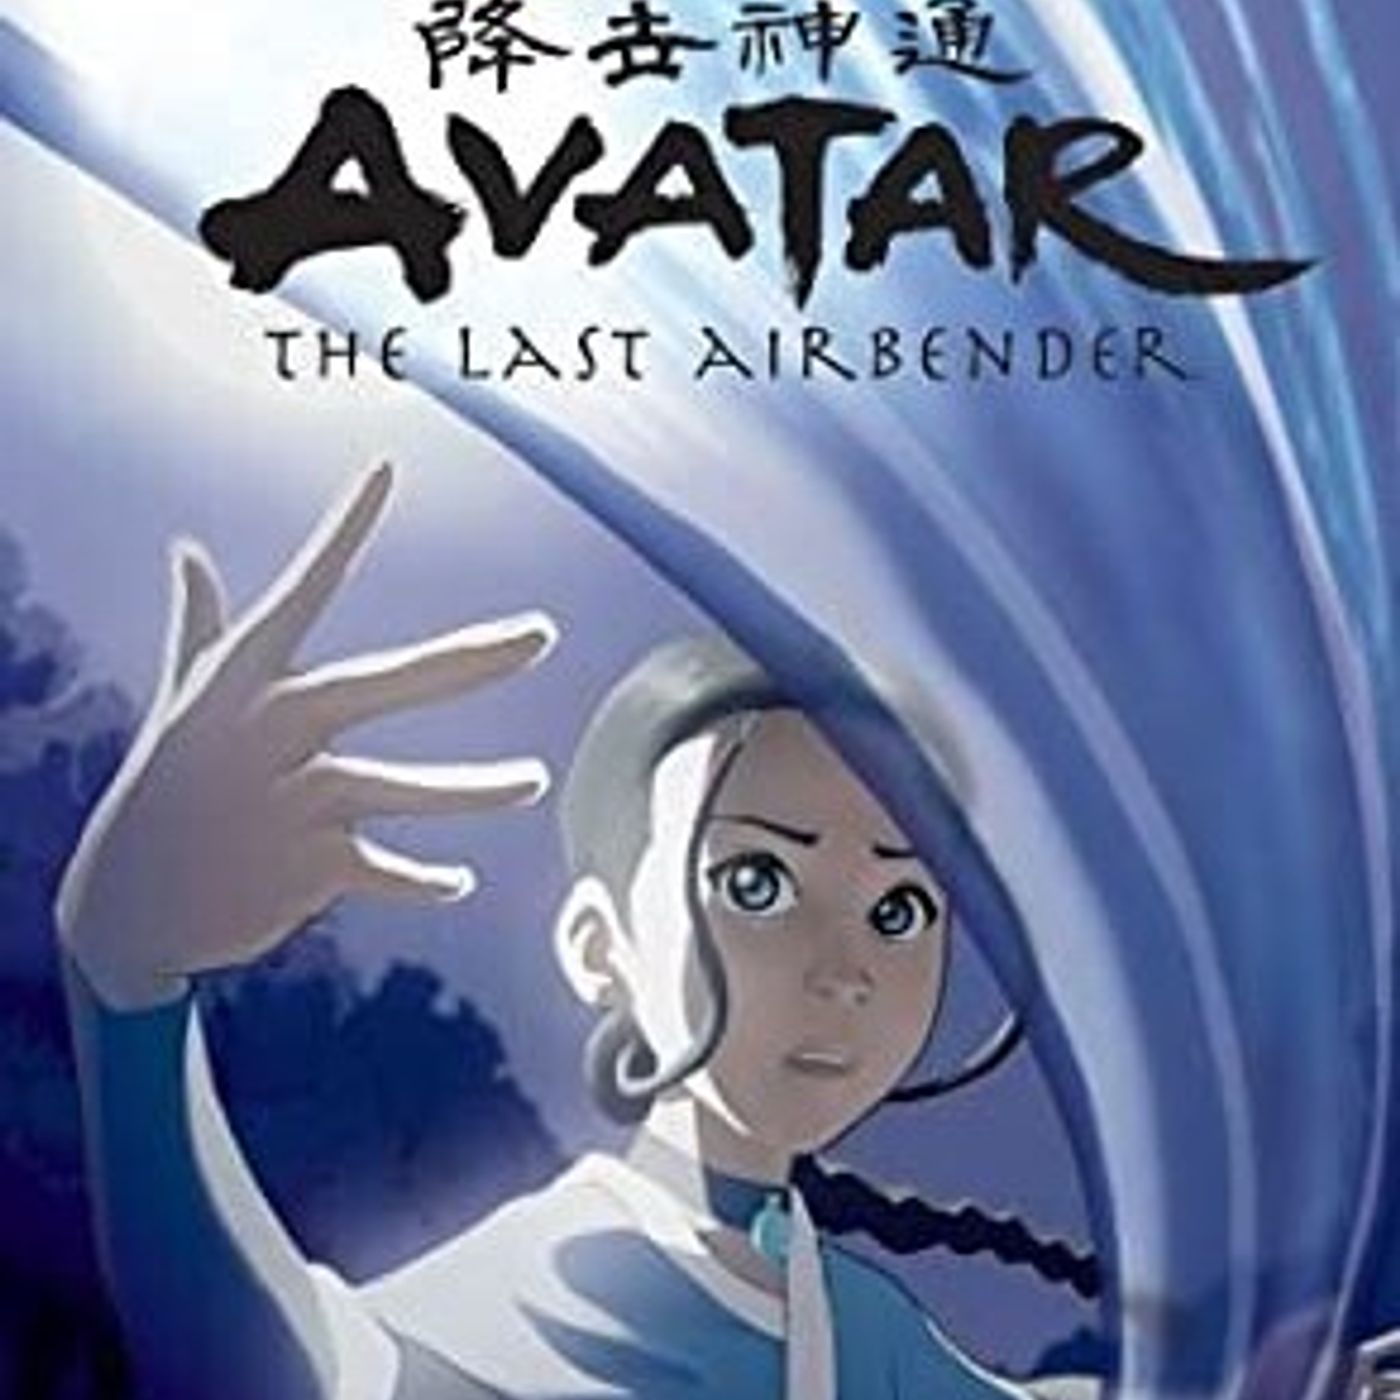 Avatar: The Last Airbender book 1: deep dive - Dreaming Machine 07